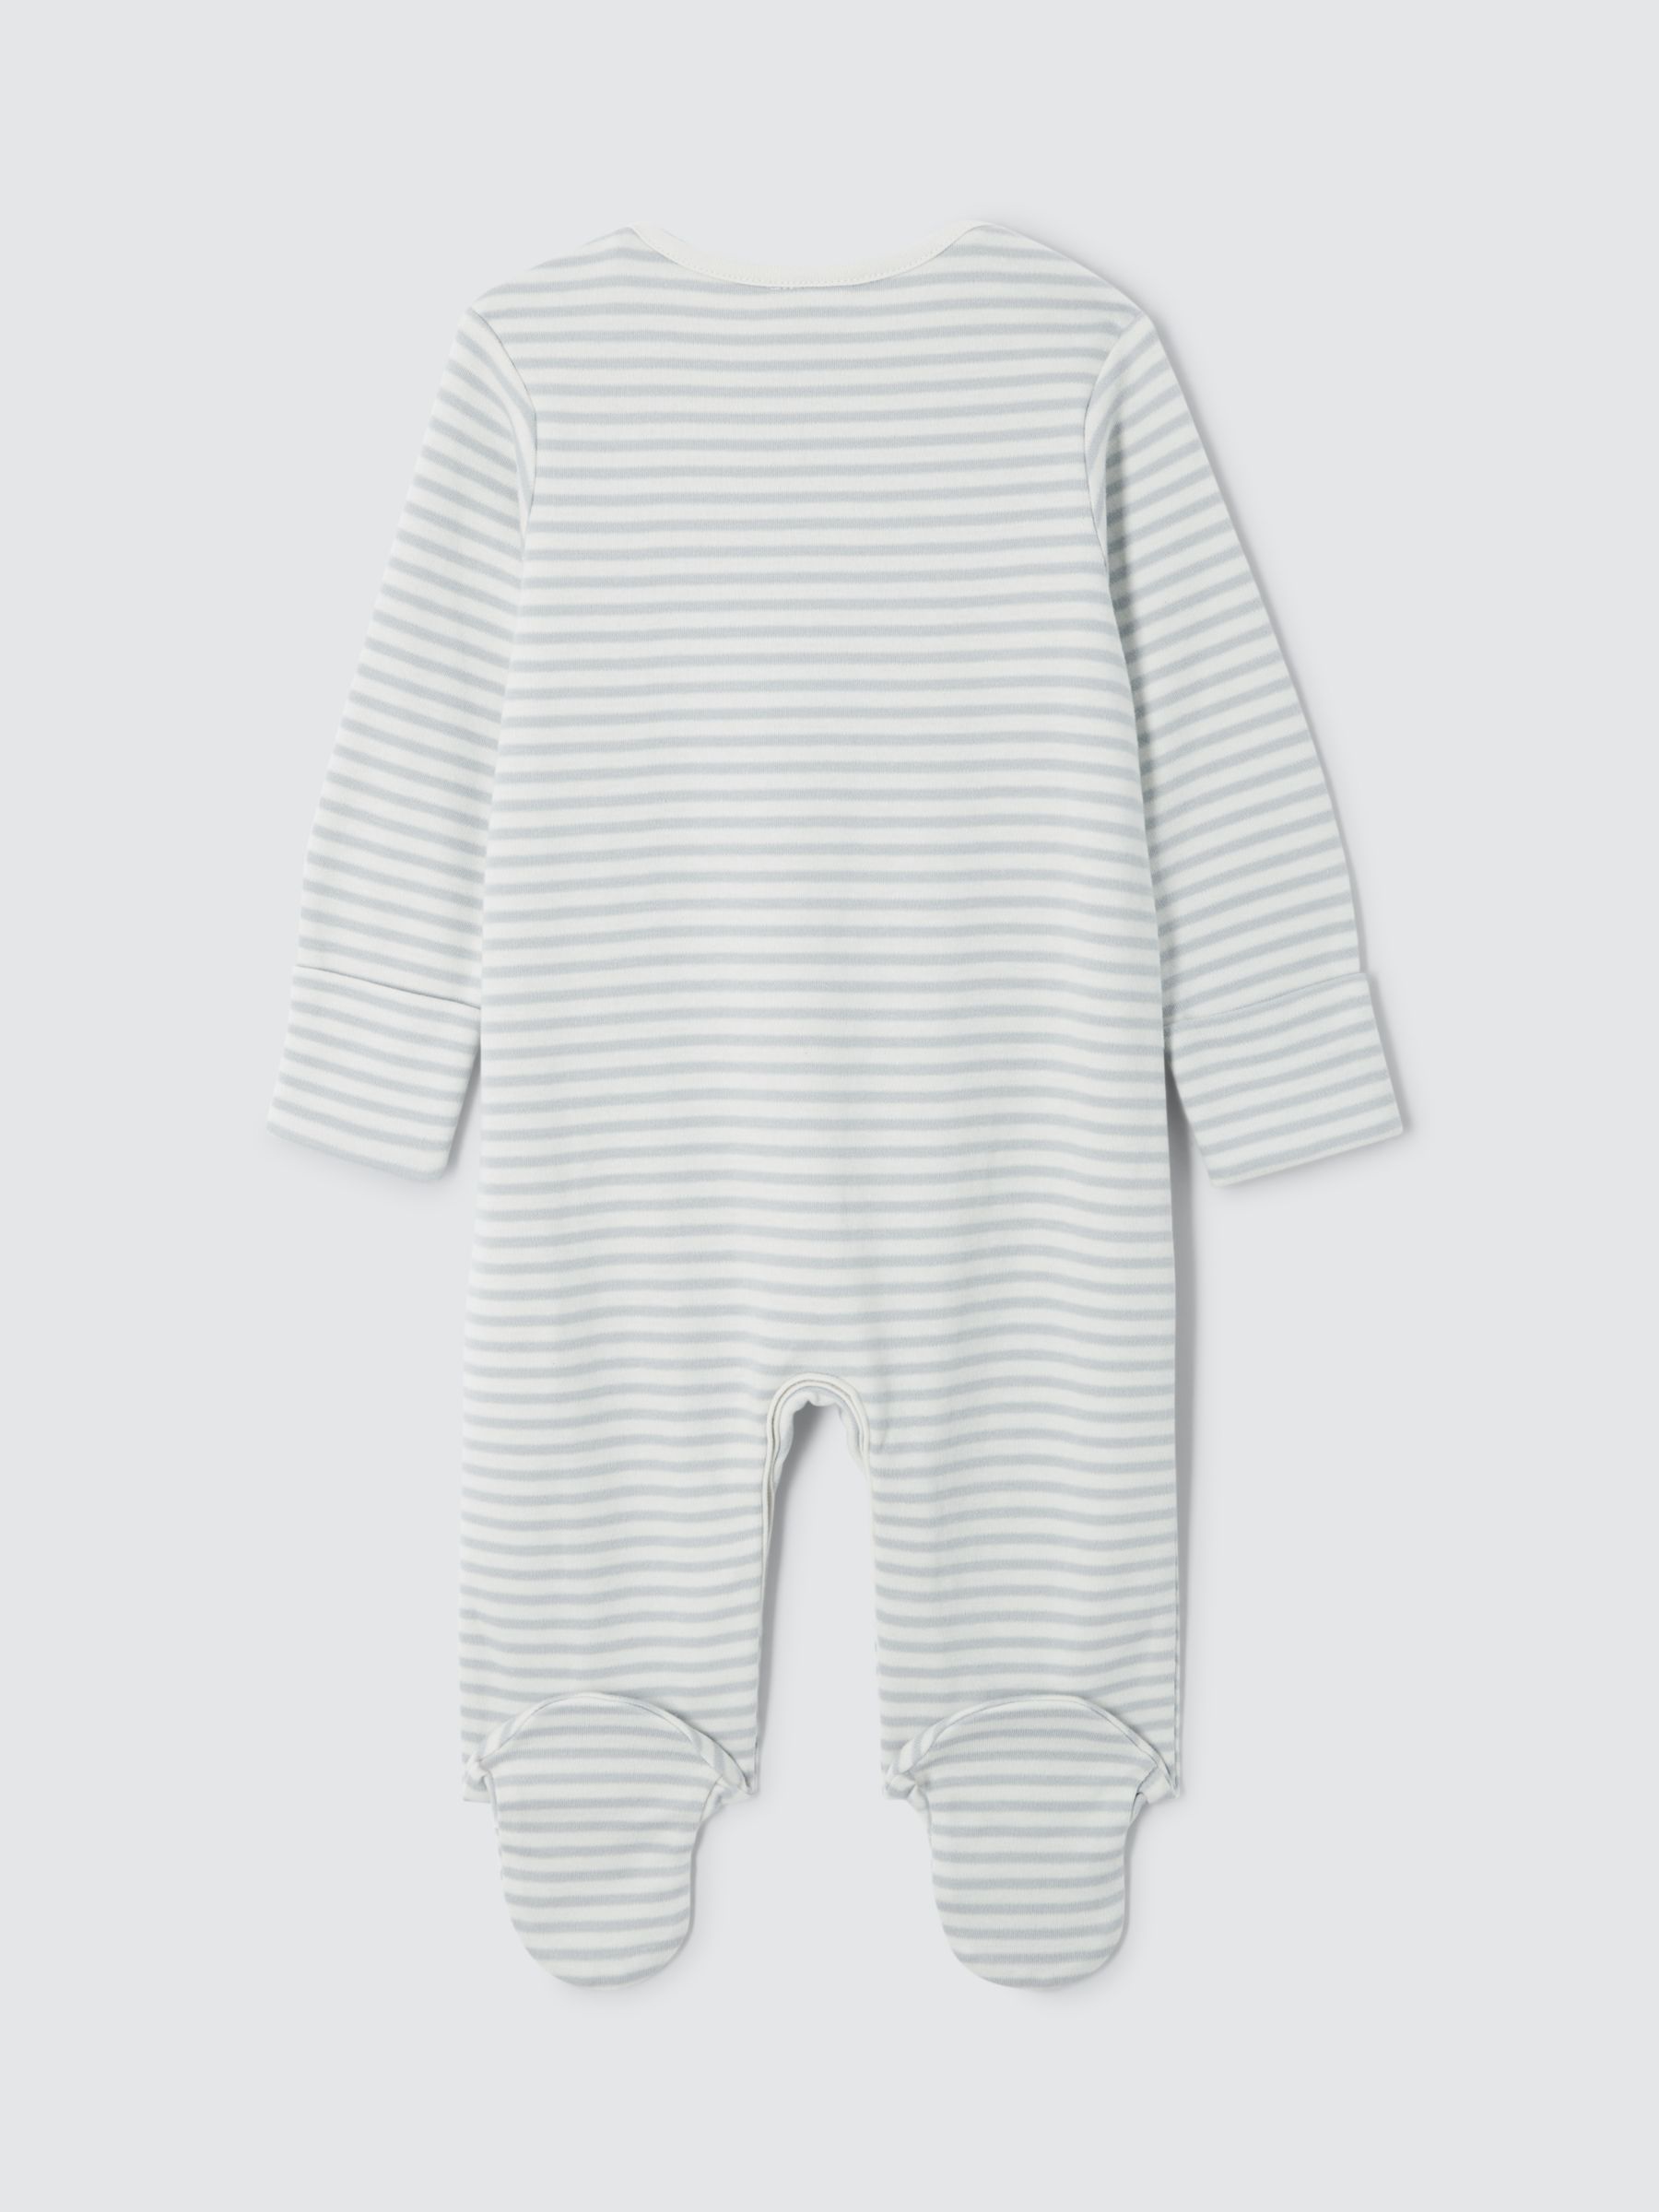 John Lewis Baby I Love Mummy Stripe Sleepsuit, Grey/Cream, 3-6 months